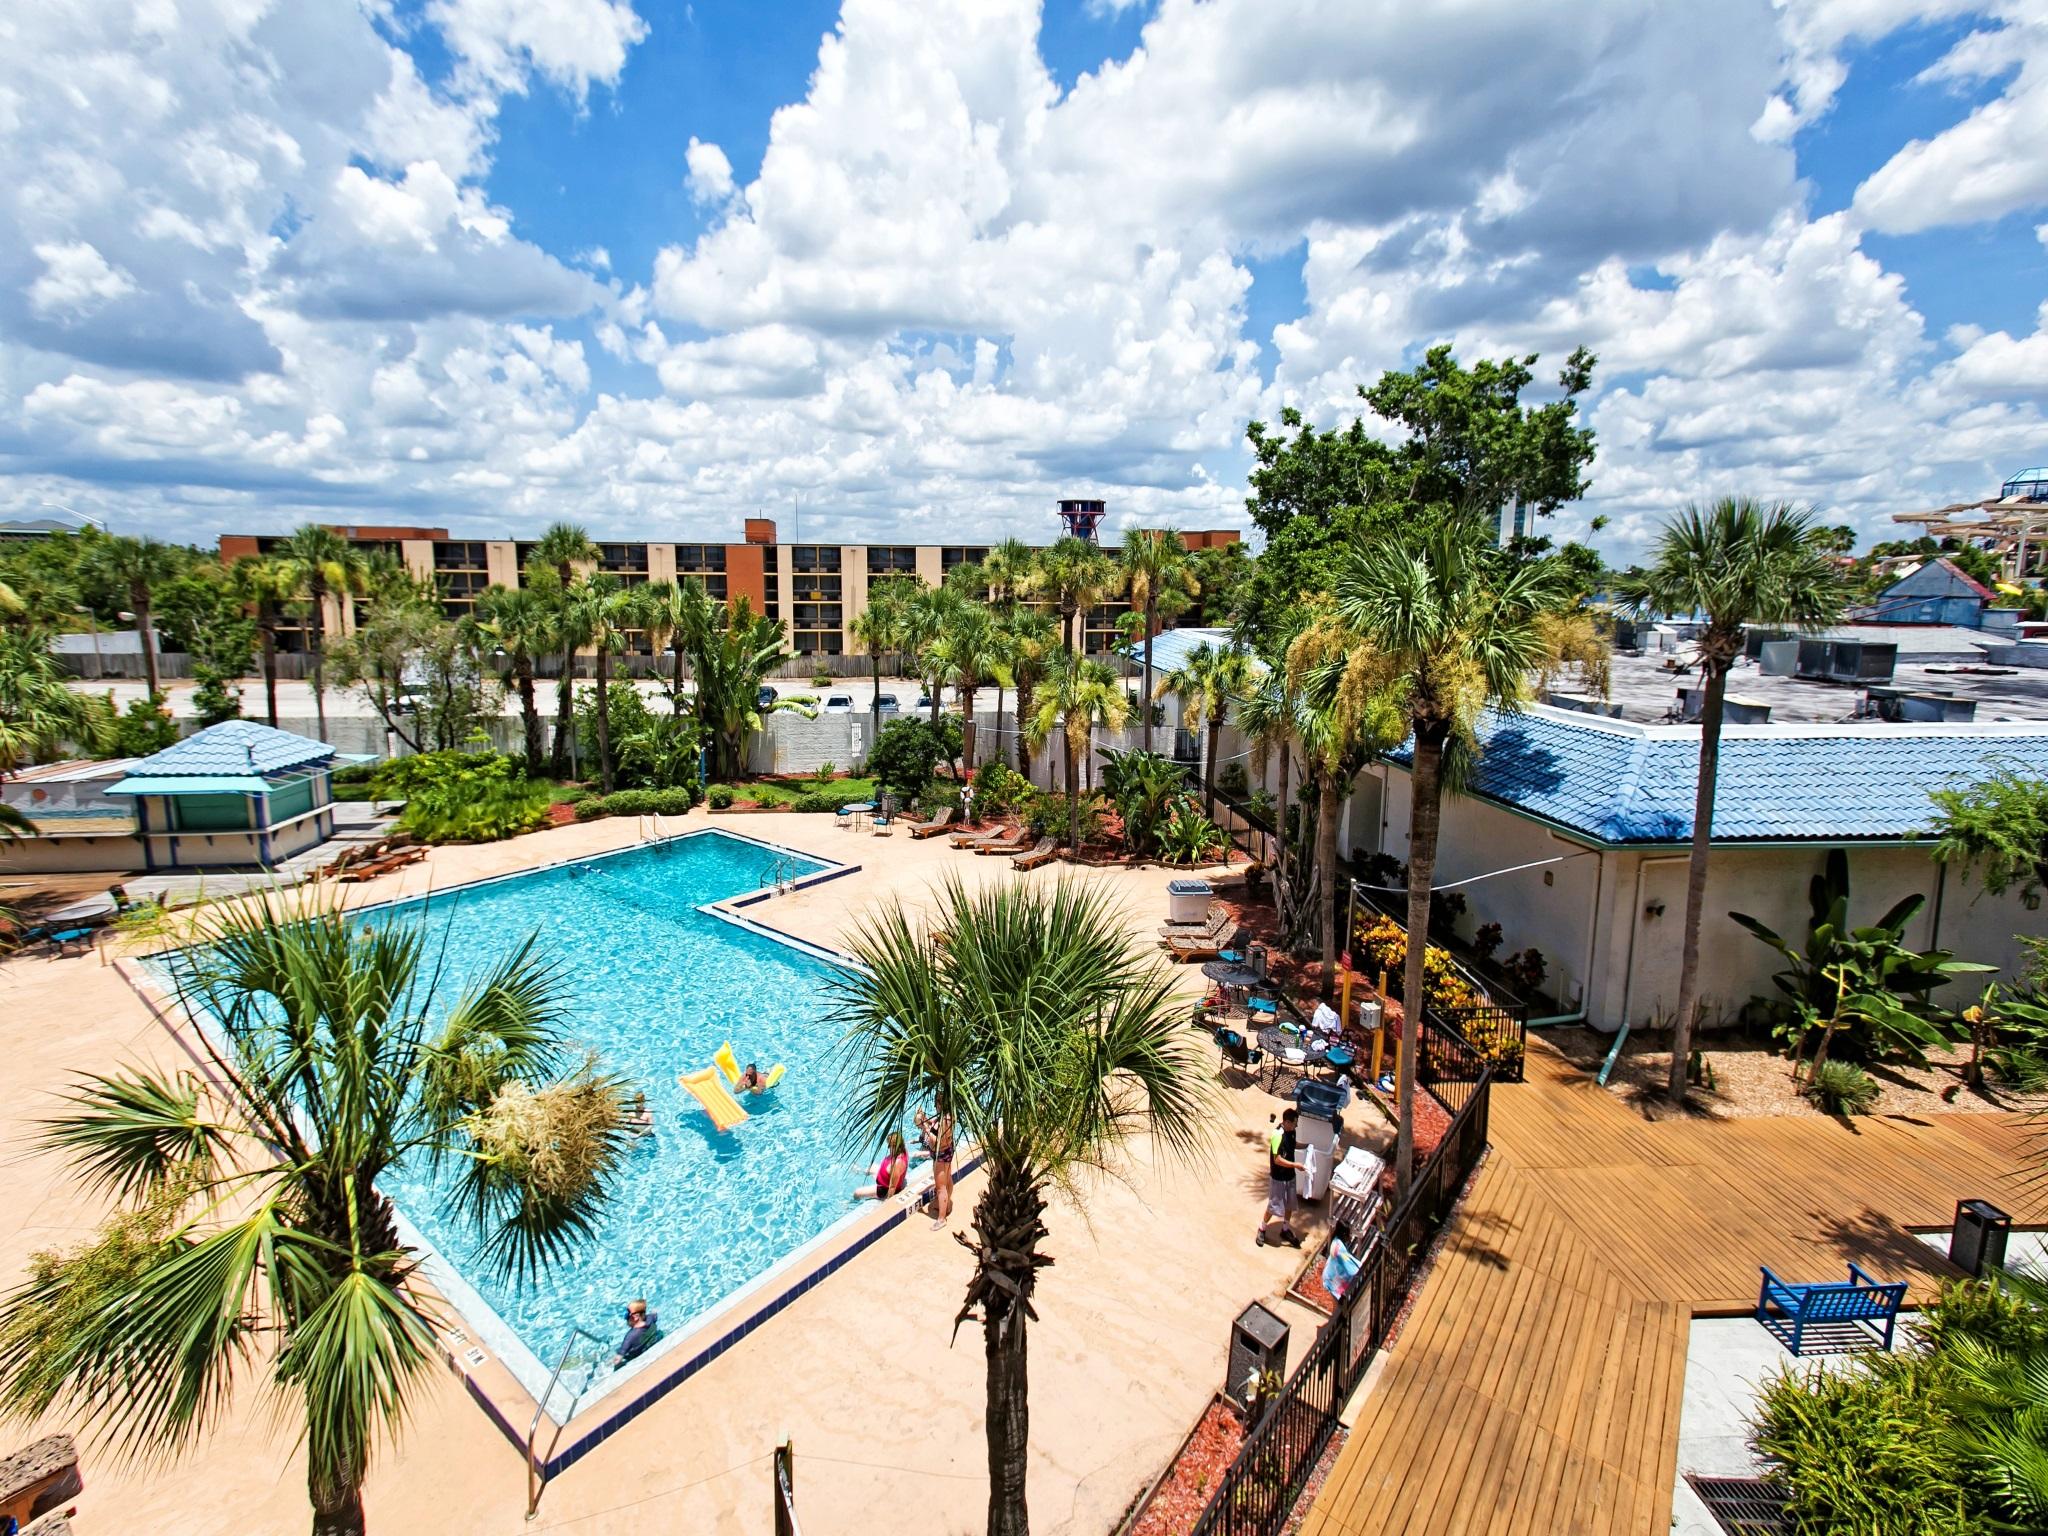 Monumental Movieland Hotel Orlando Luaran gambar